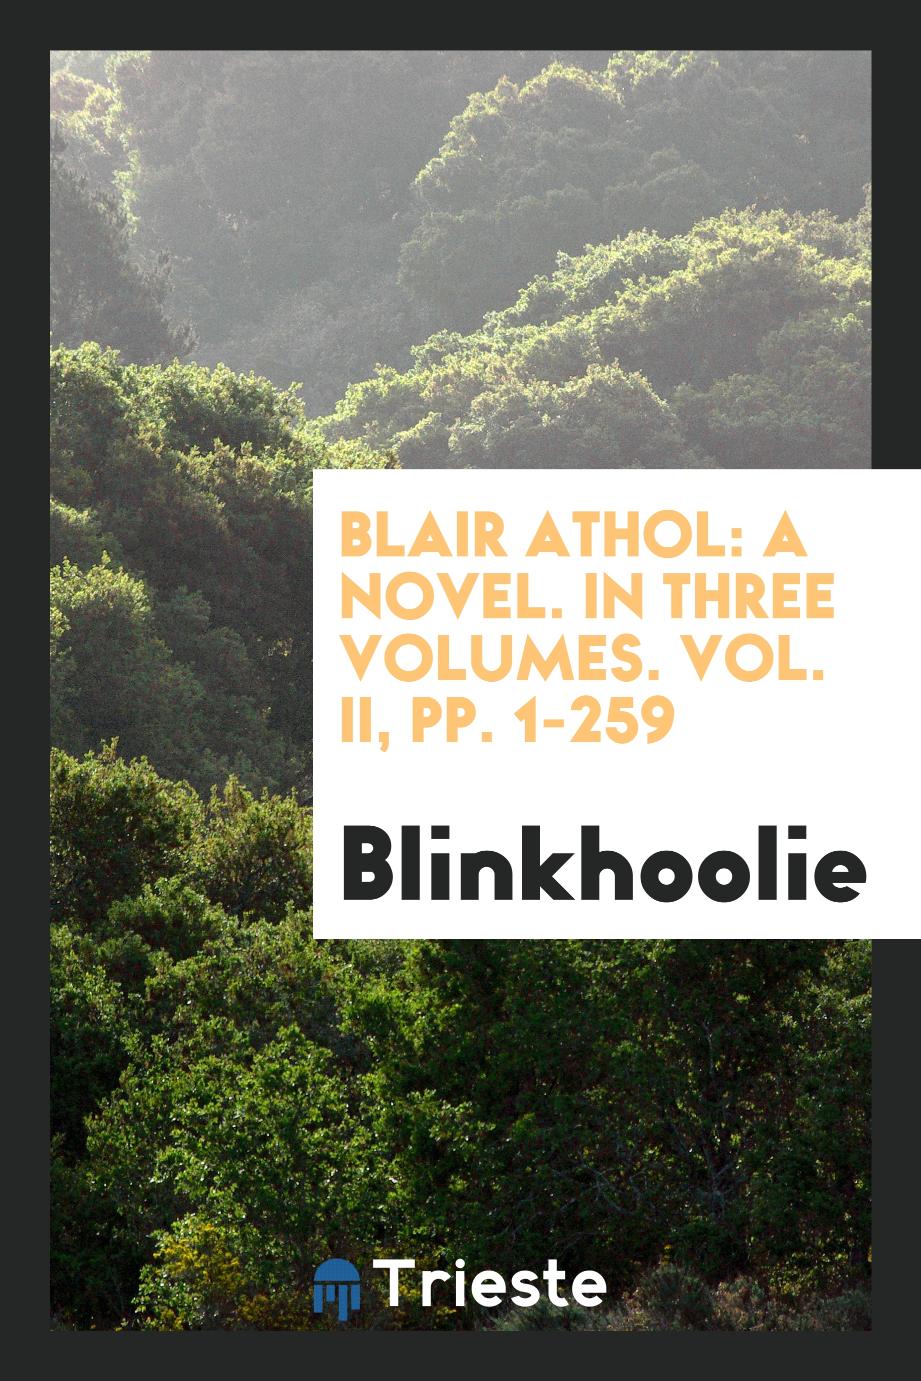 Blair Athol: a novel. In three volumes. Vol. II, pp. 1-259